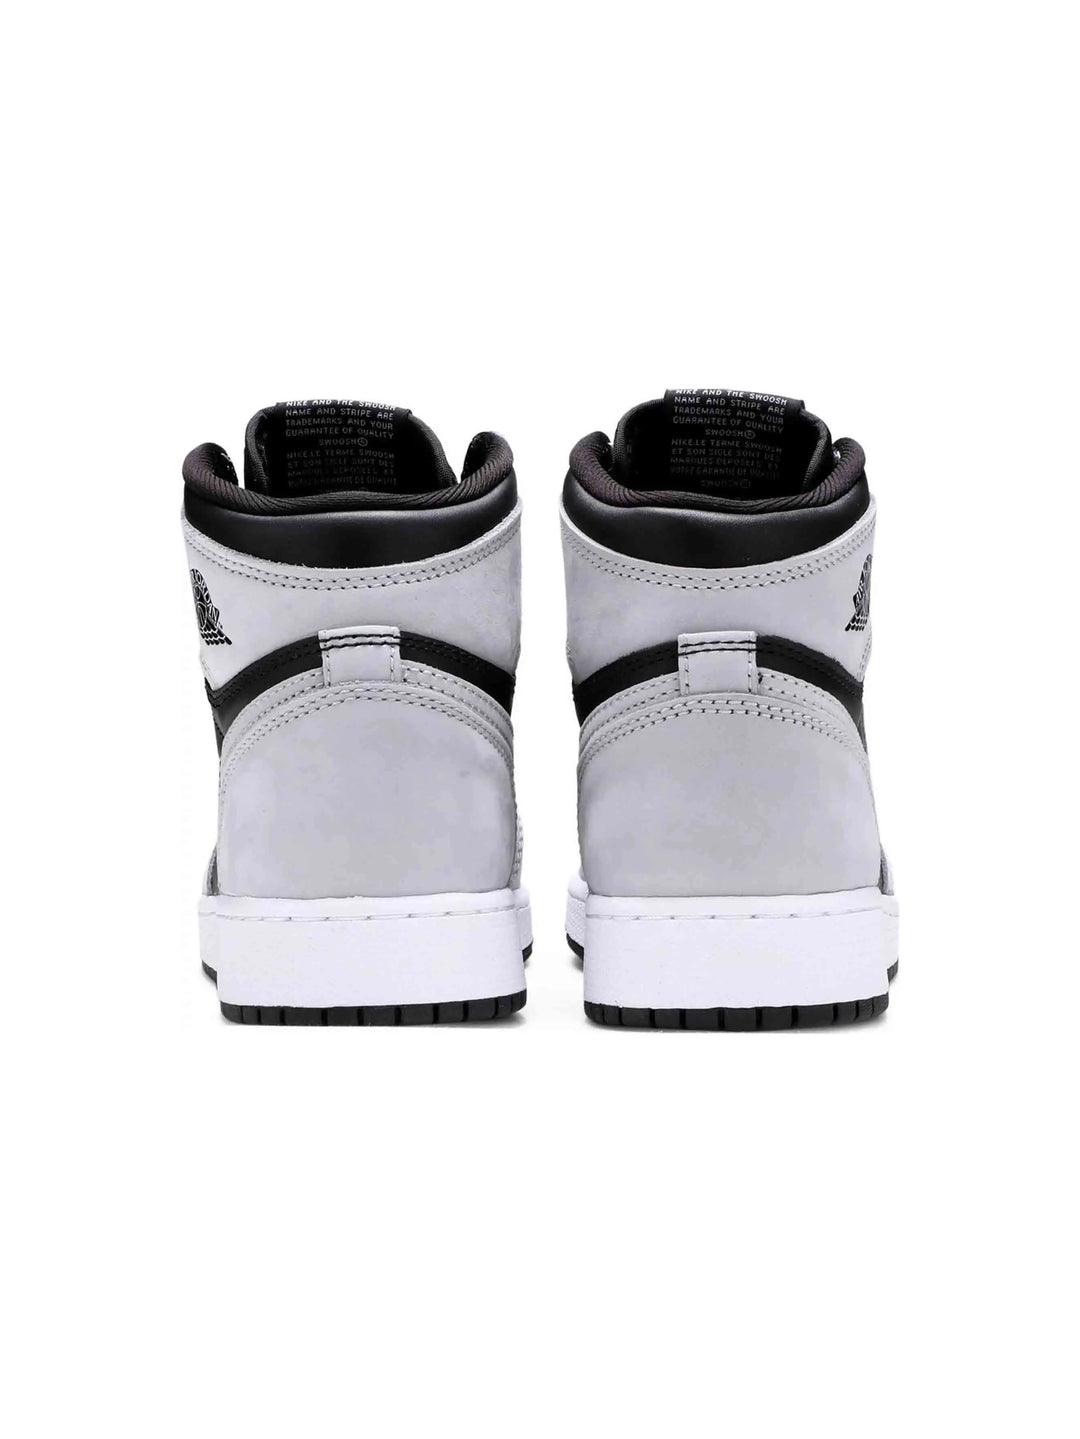 Nike Air Jordan 1 Retro High Shadow 2.0 (GS) Prior